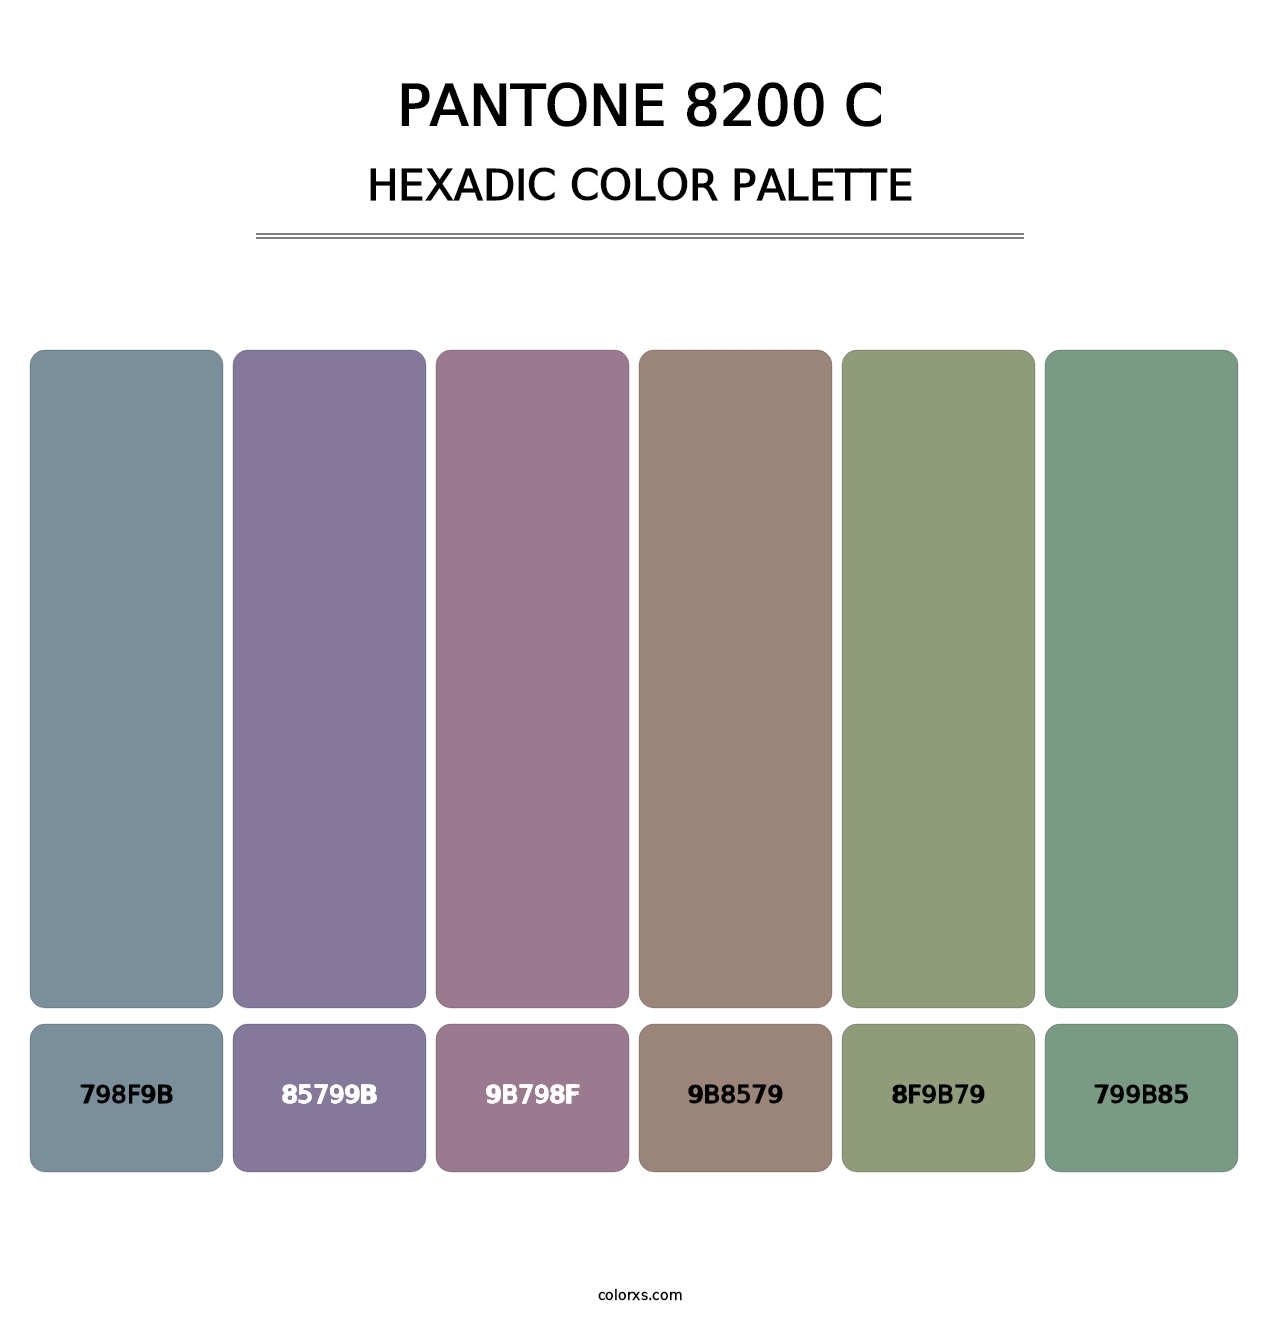 PANTONE 8200 C - Hexadic Color Palette